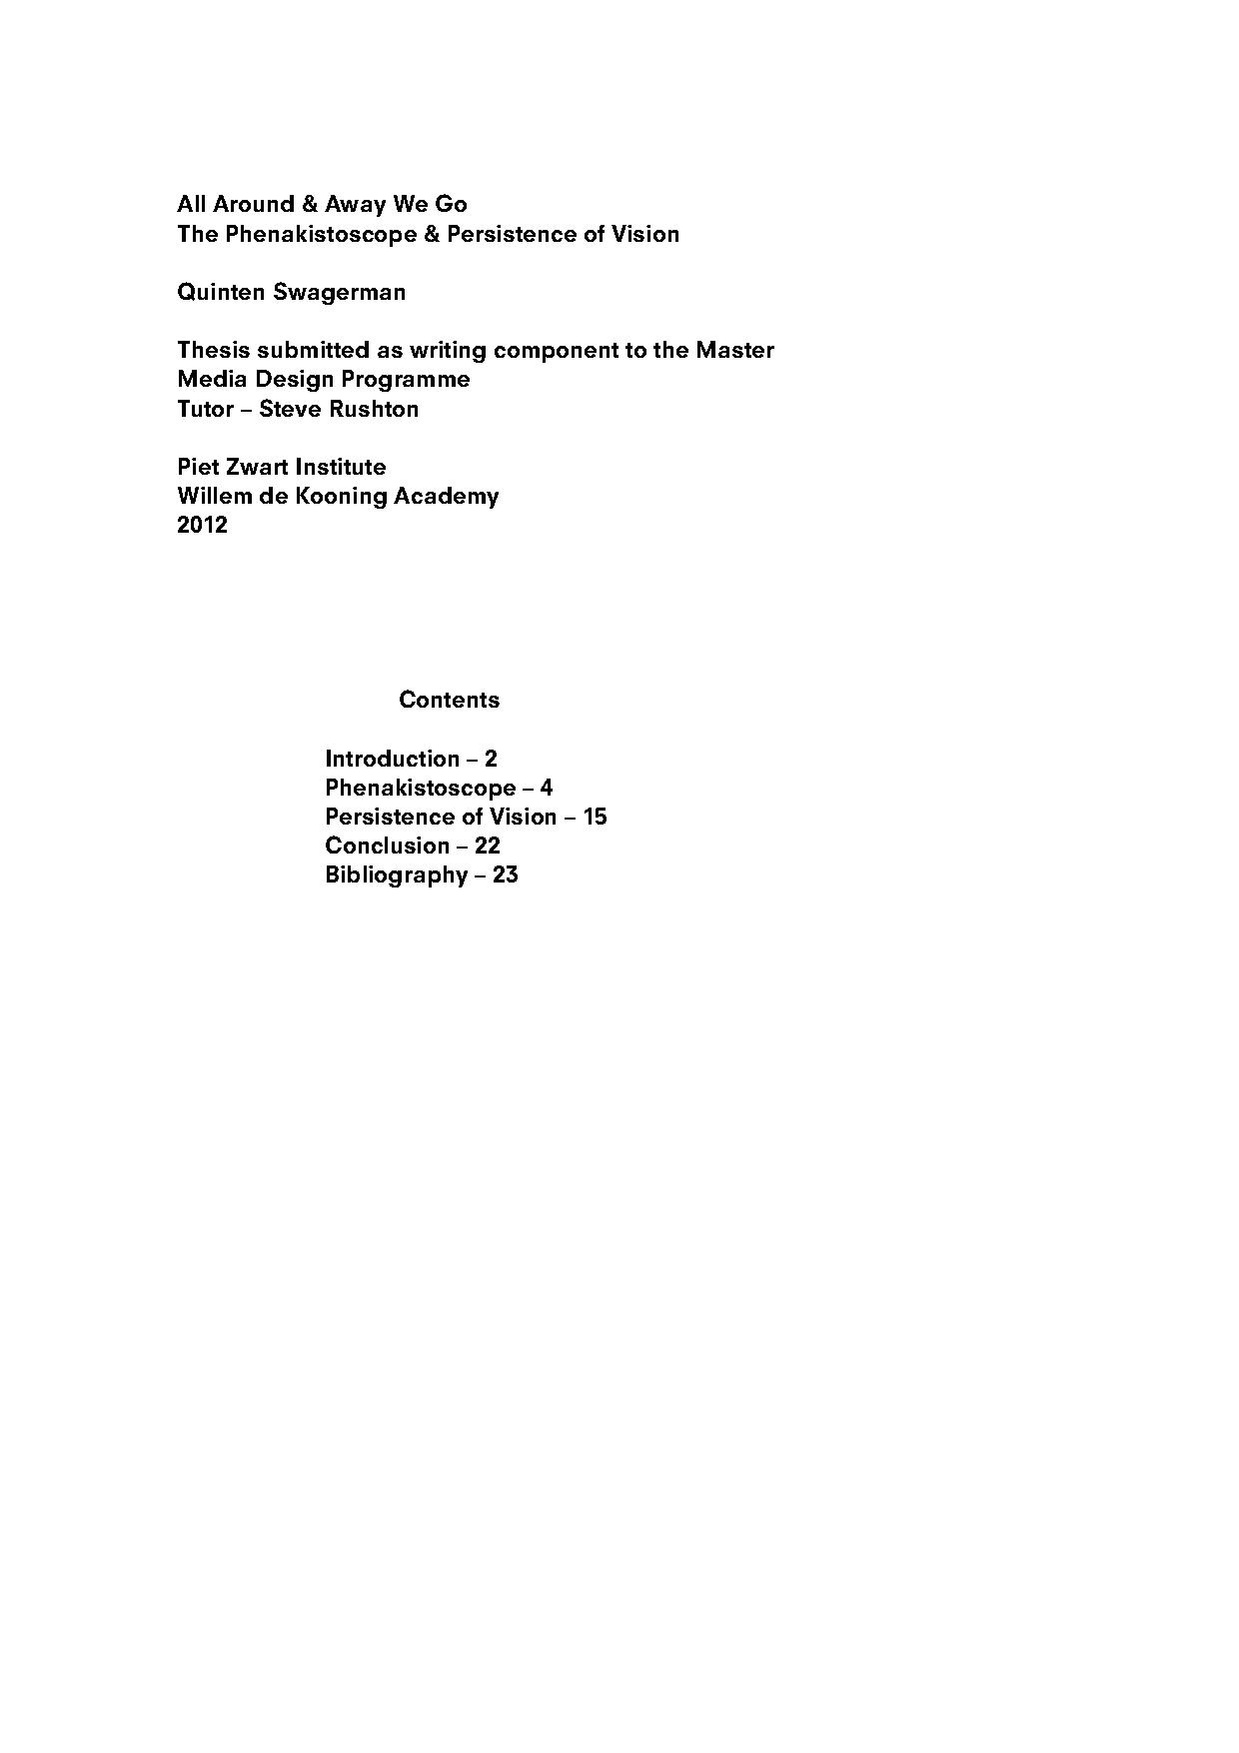 Quinten swagerman final thesis 2012.pdf